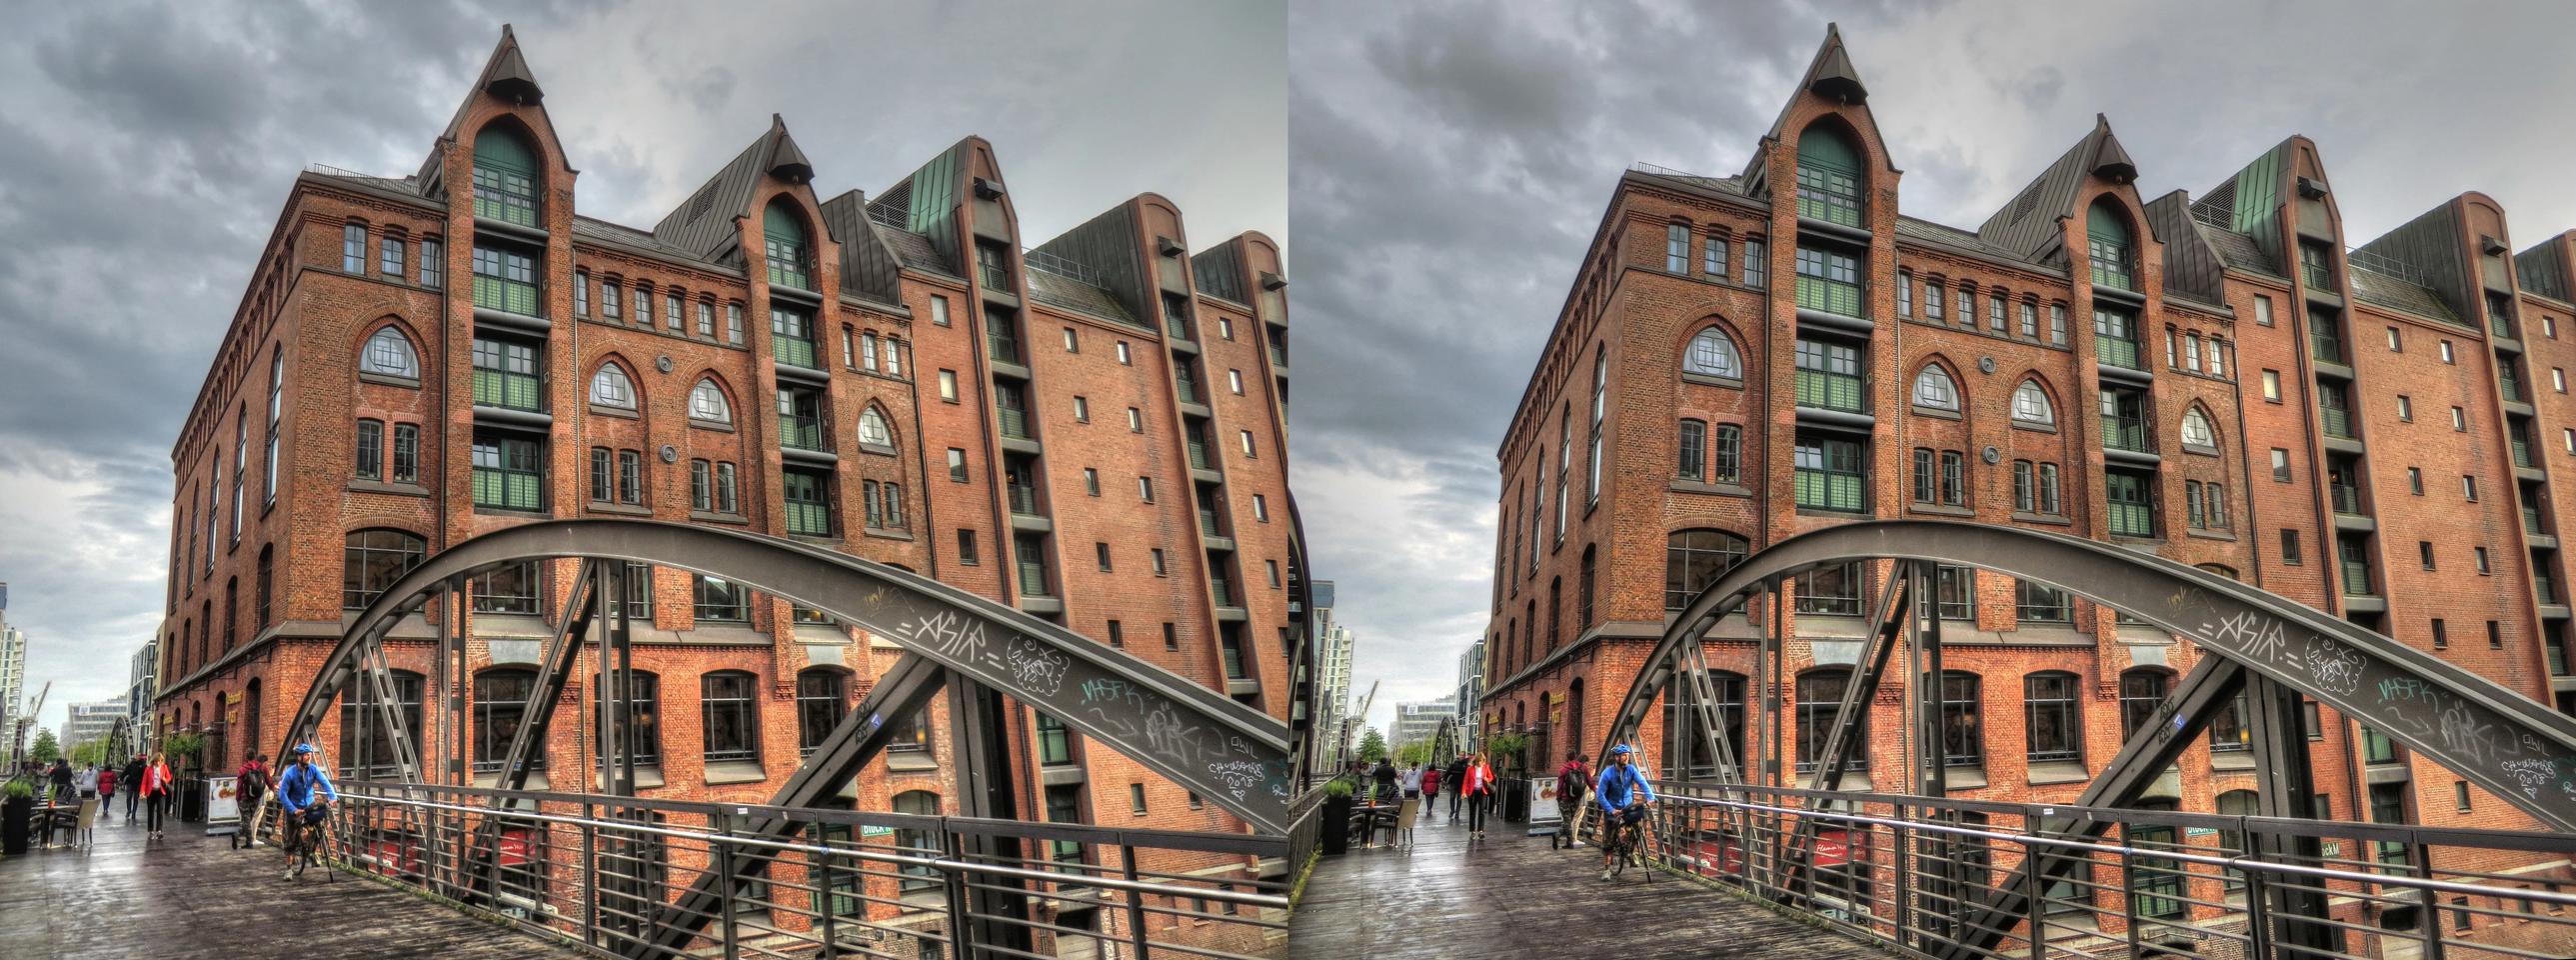 Hamburg (Germany), the old docks district.